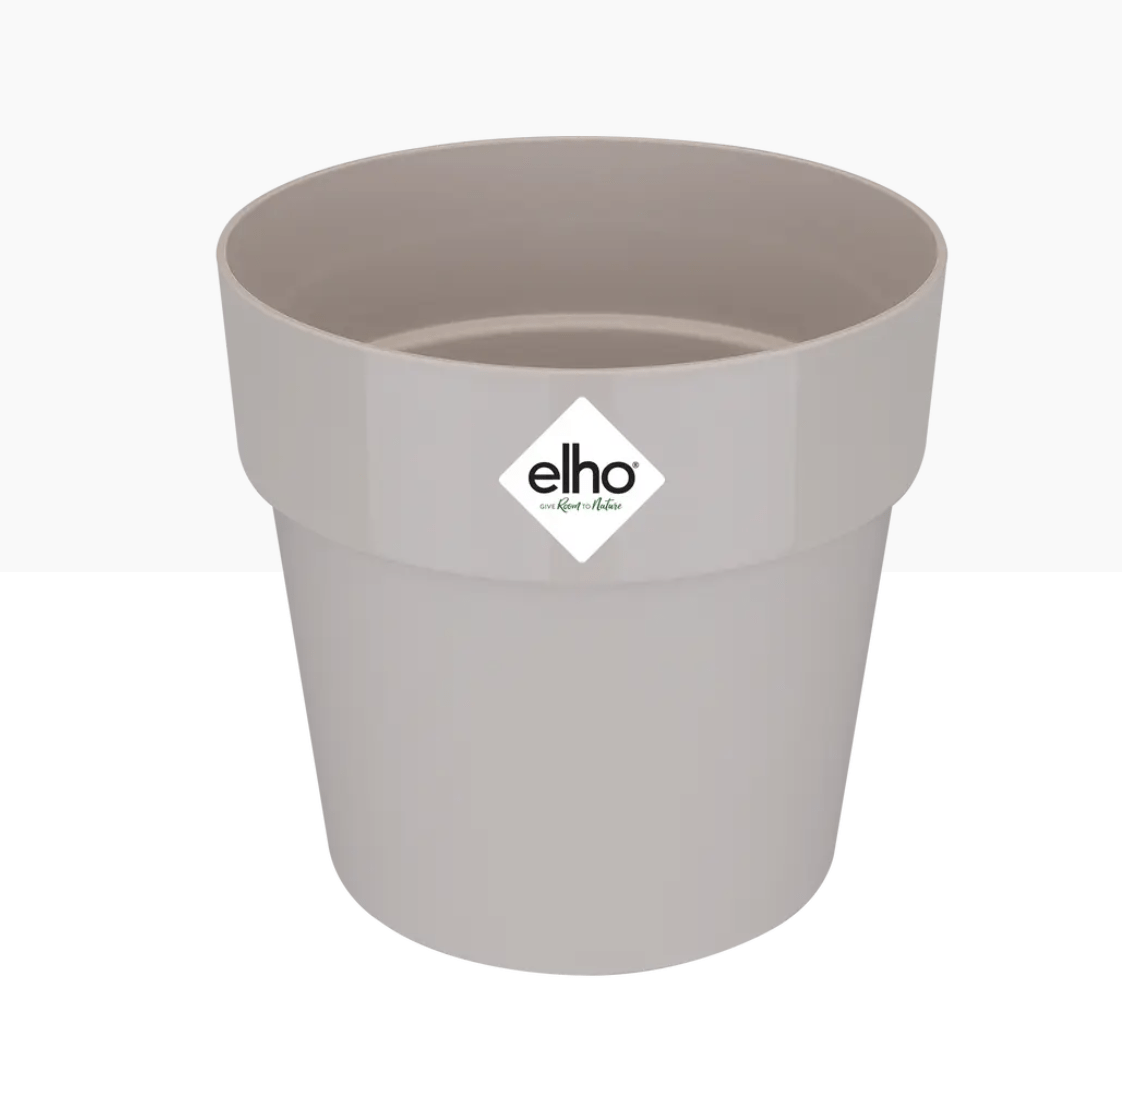 Elho Plant Pot 30cm / Warm Grey Recycled Plastic Plant Pot  -' b.for original' in warm grey